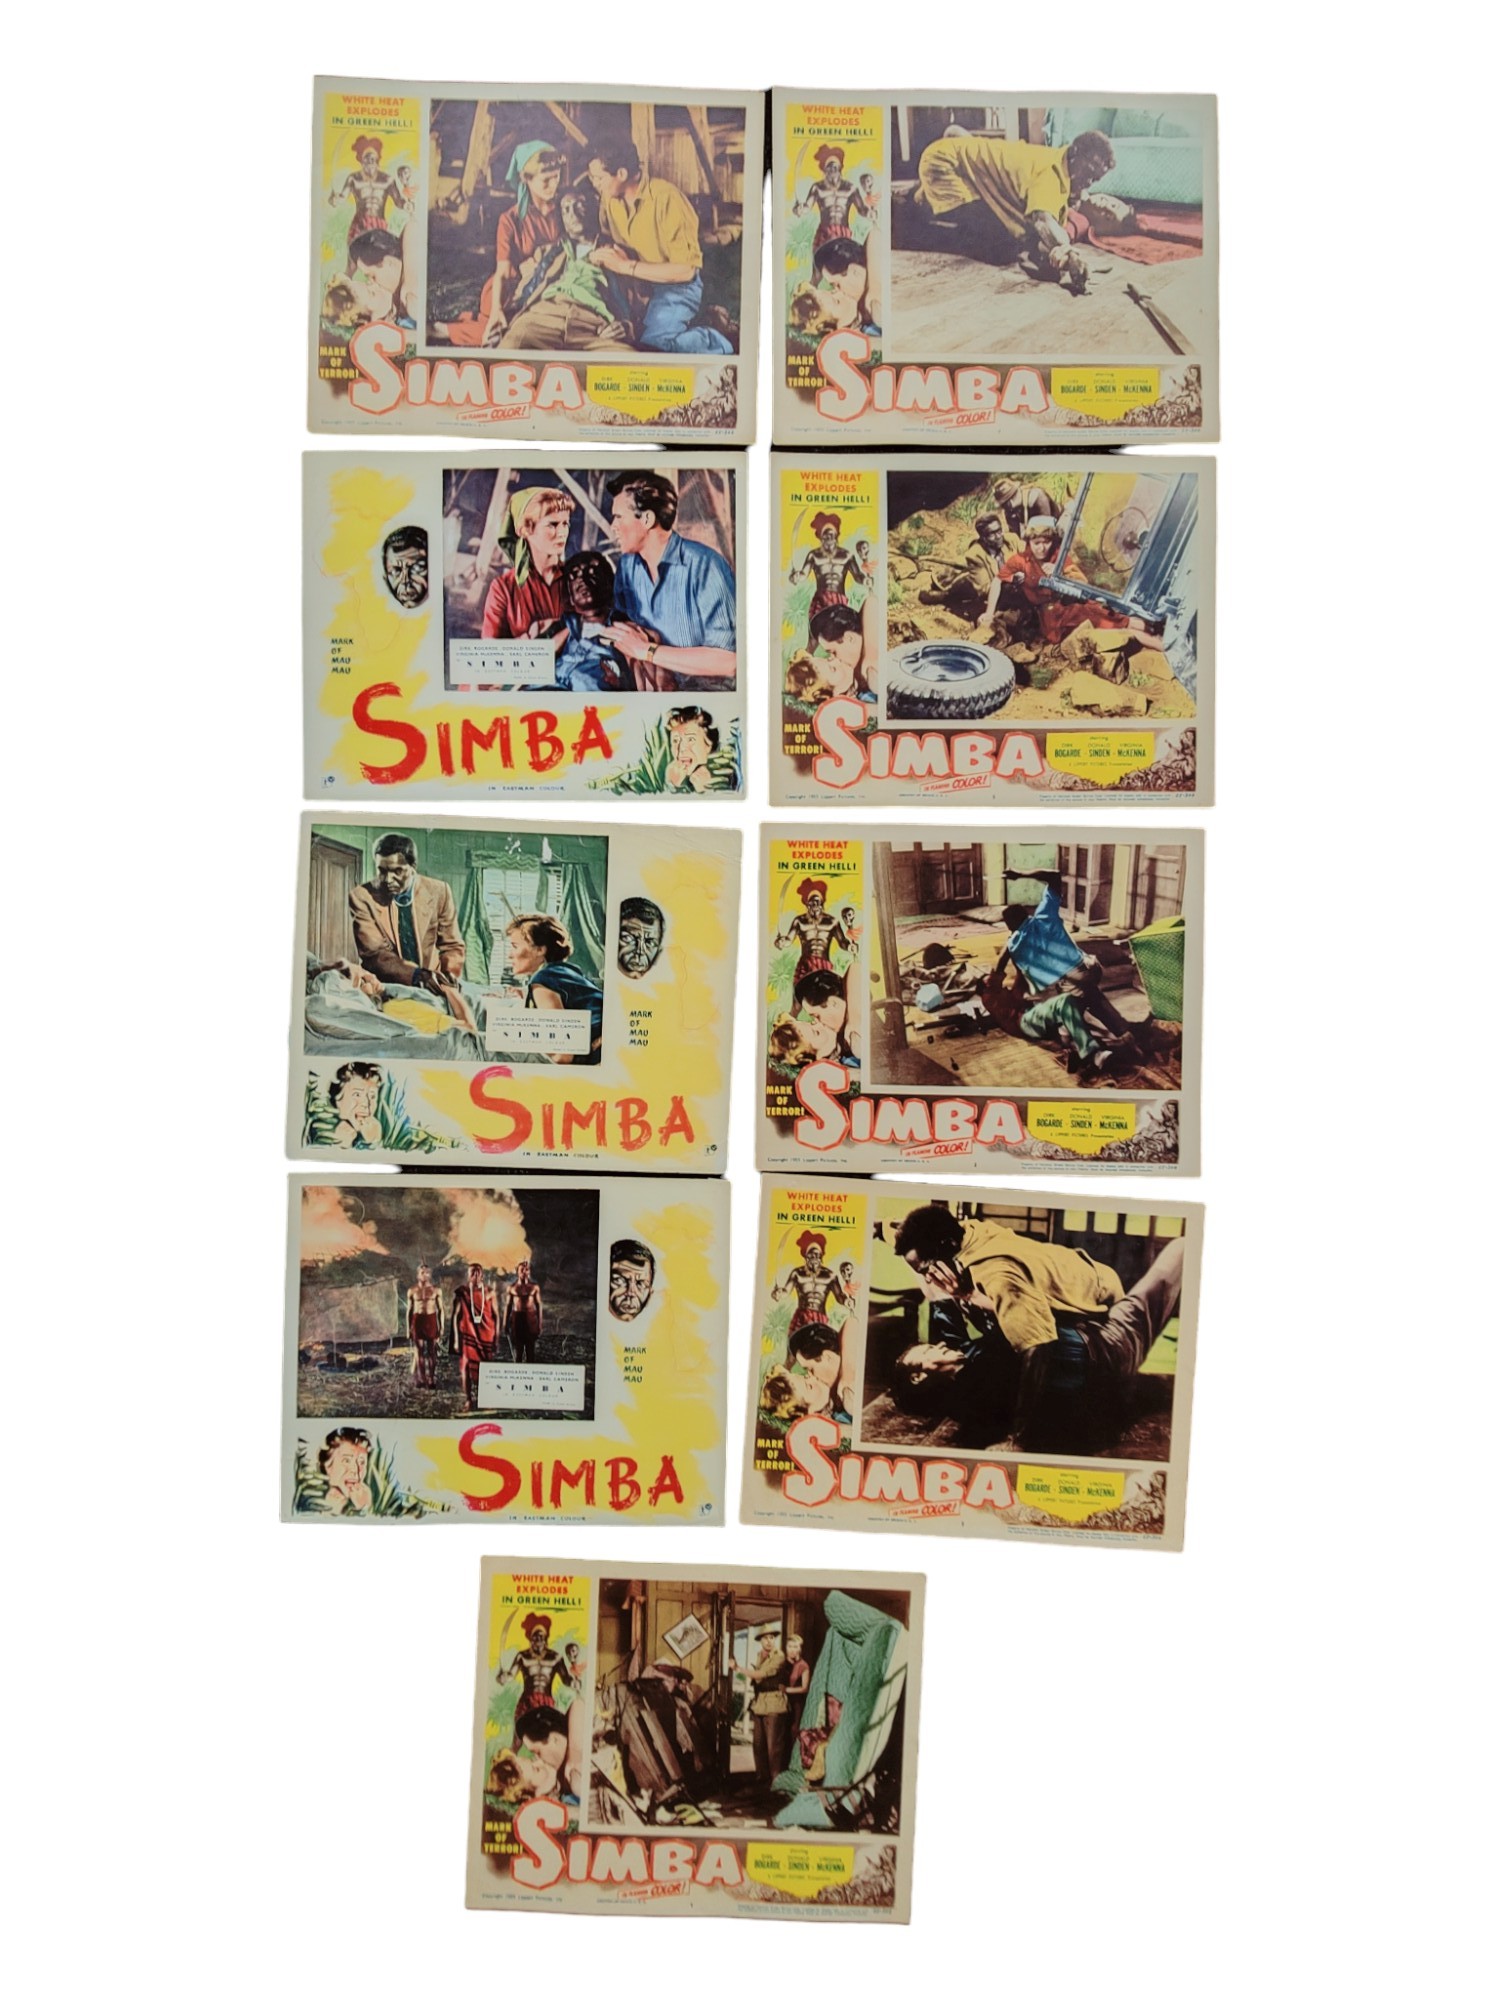 BRIAN DESMOND HURST COLLECTION - 9 X MOVIE LOBBY CARDS - 'SIMBA'